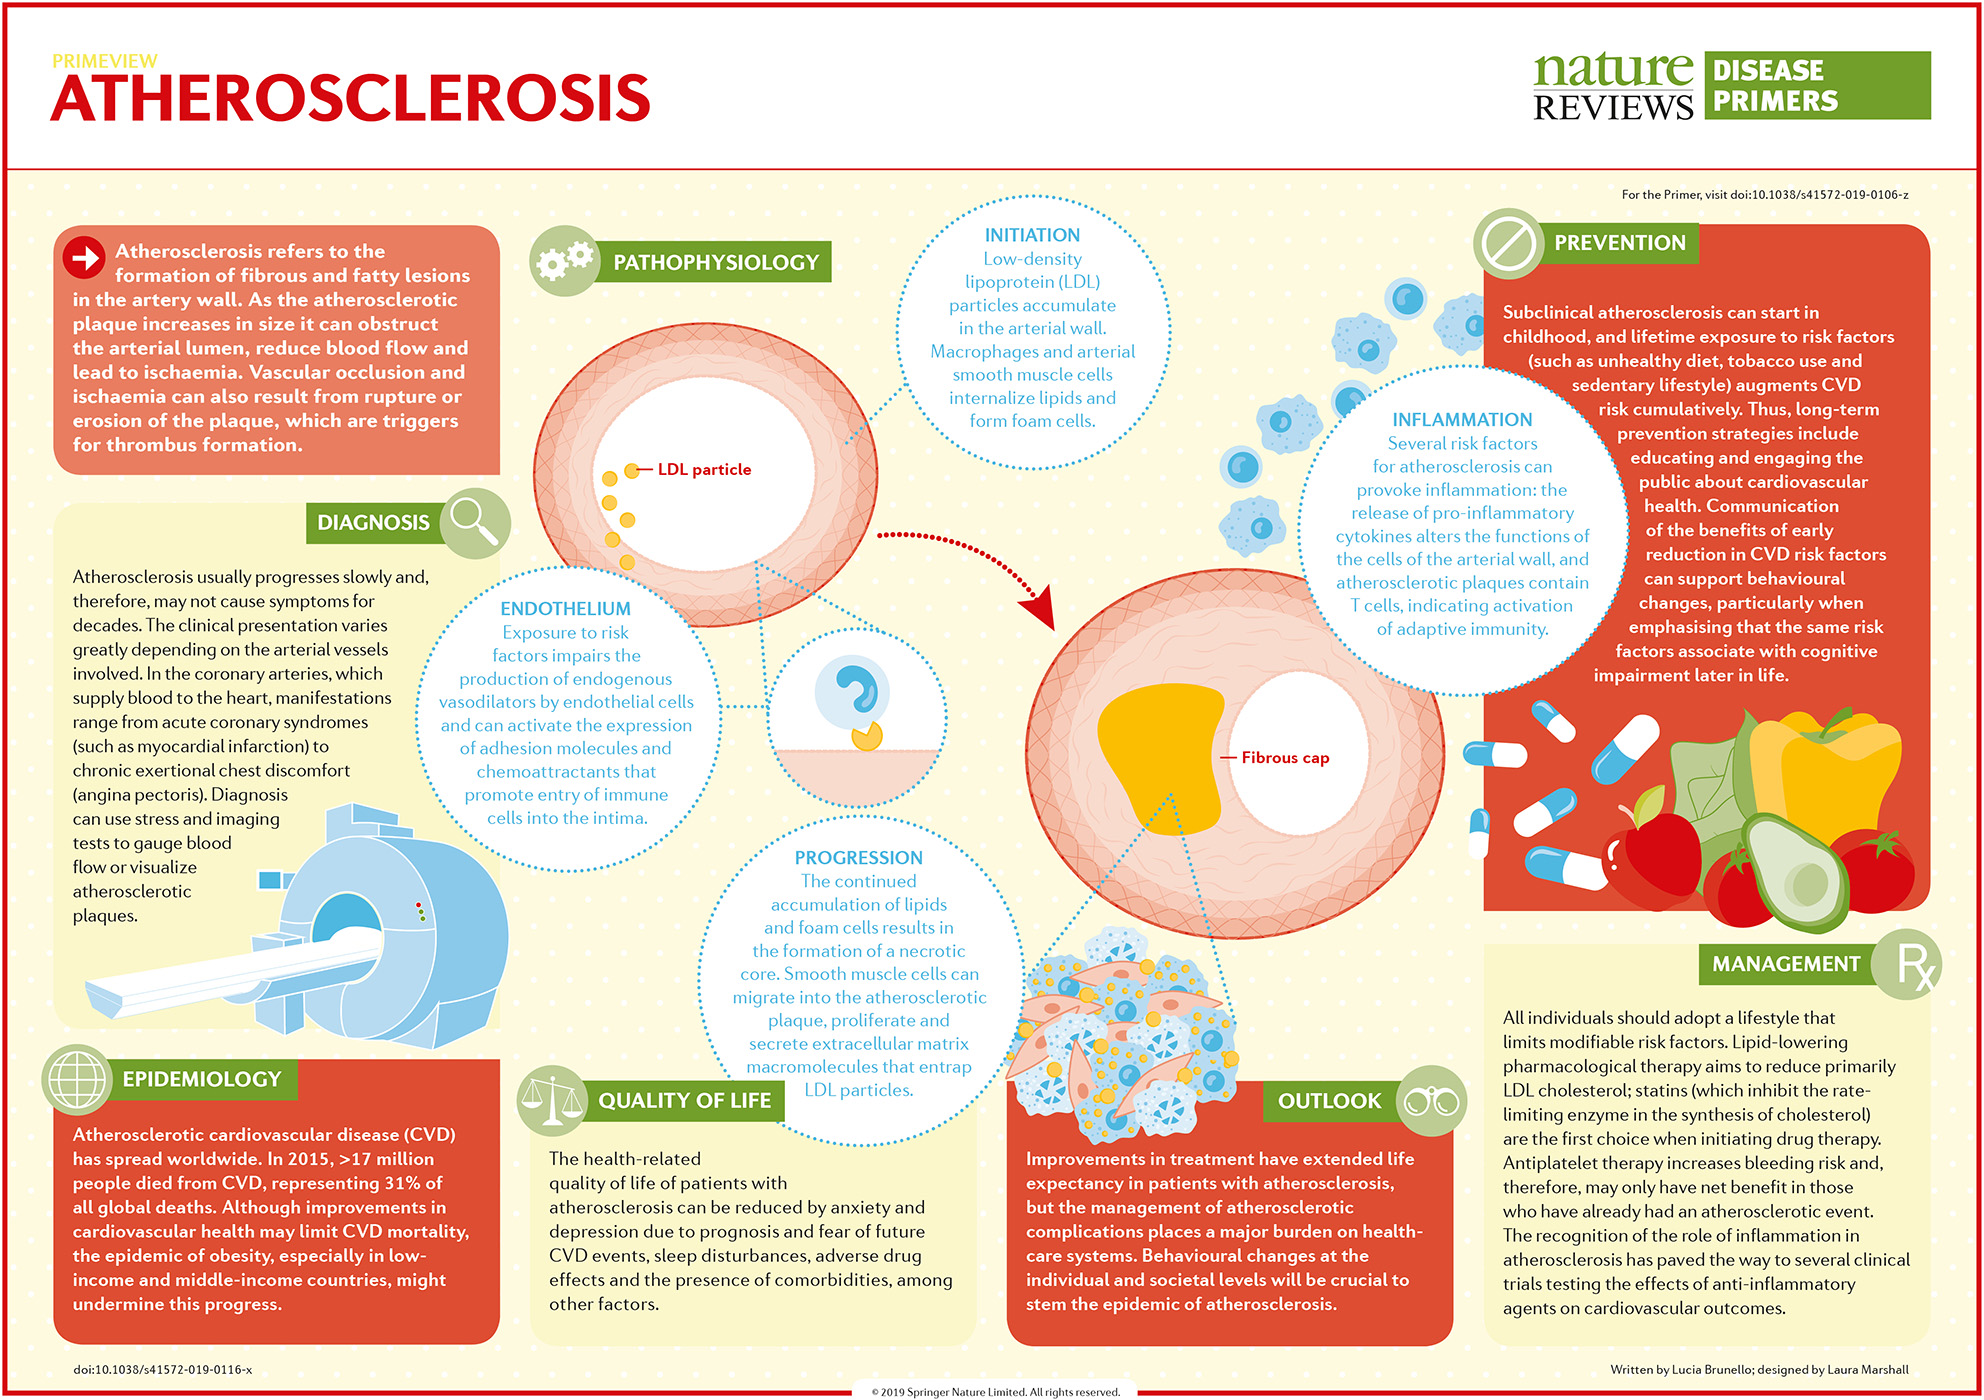 Nature reviews. Atherosclerosis risk Factors. Nature Reviews disease primers.